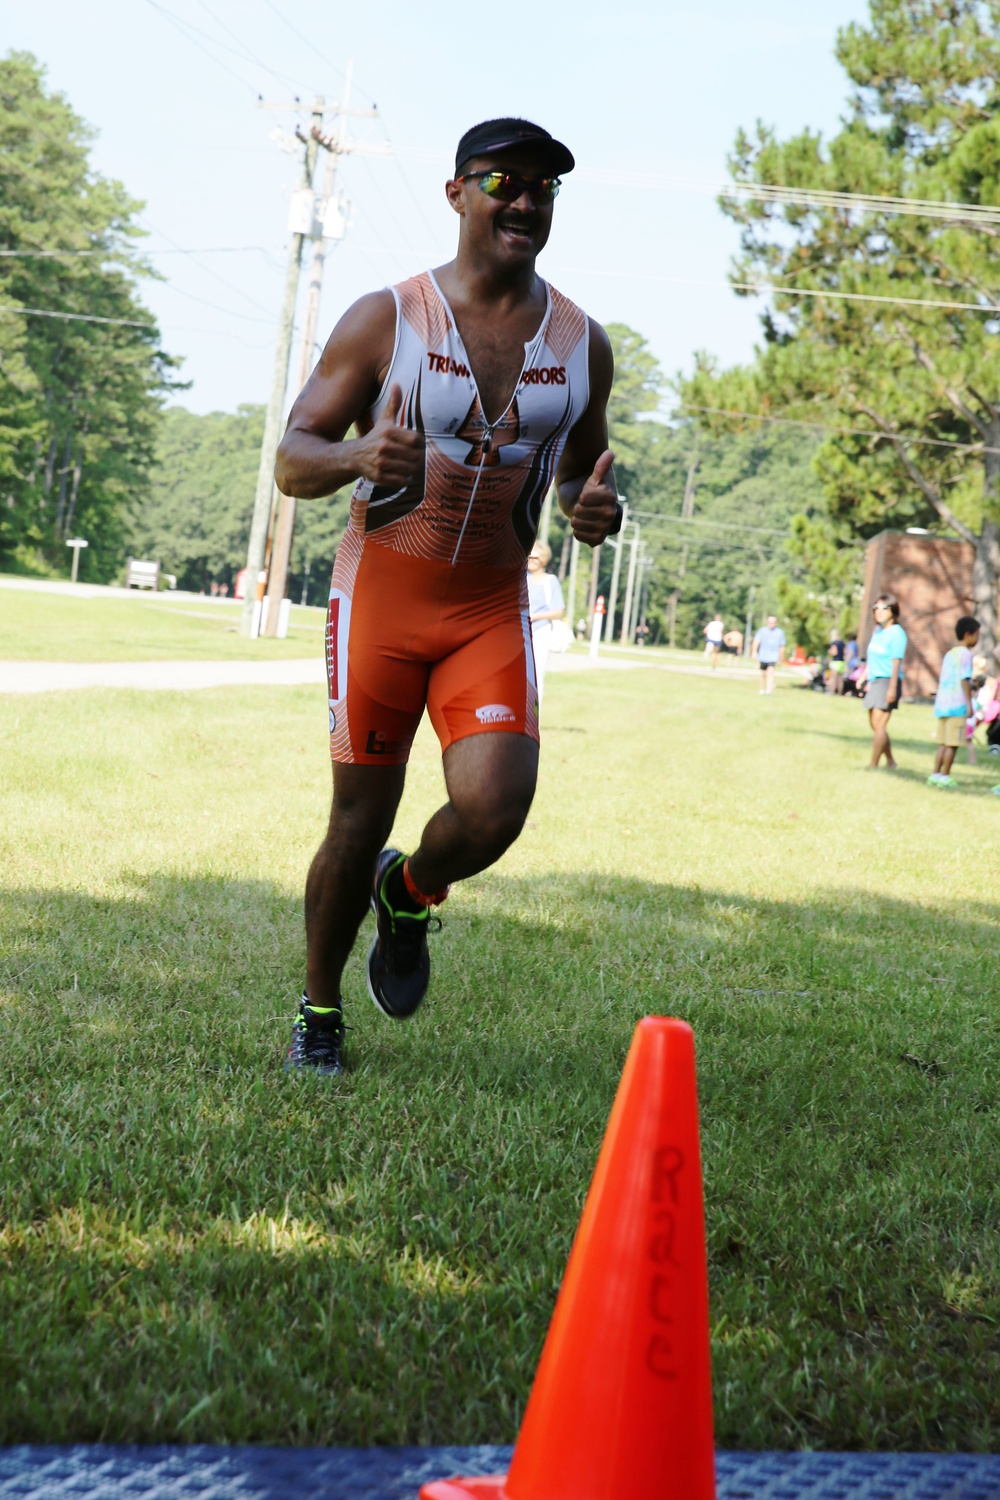 Competitors swim, bike, run to finish line